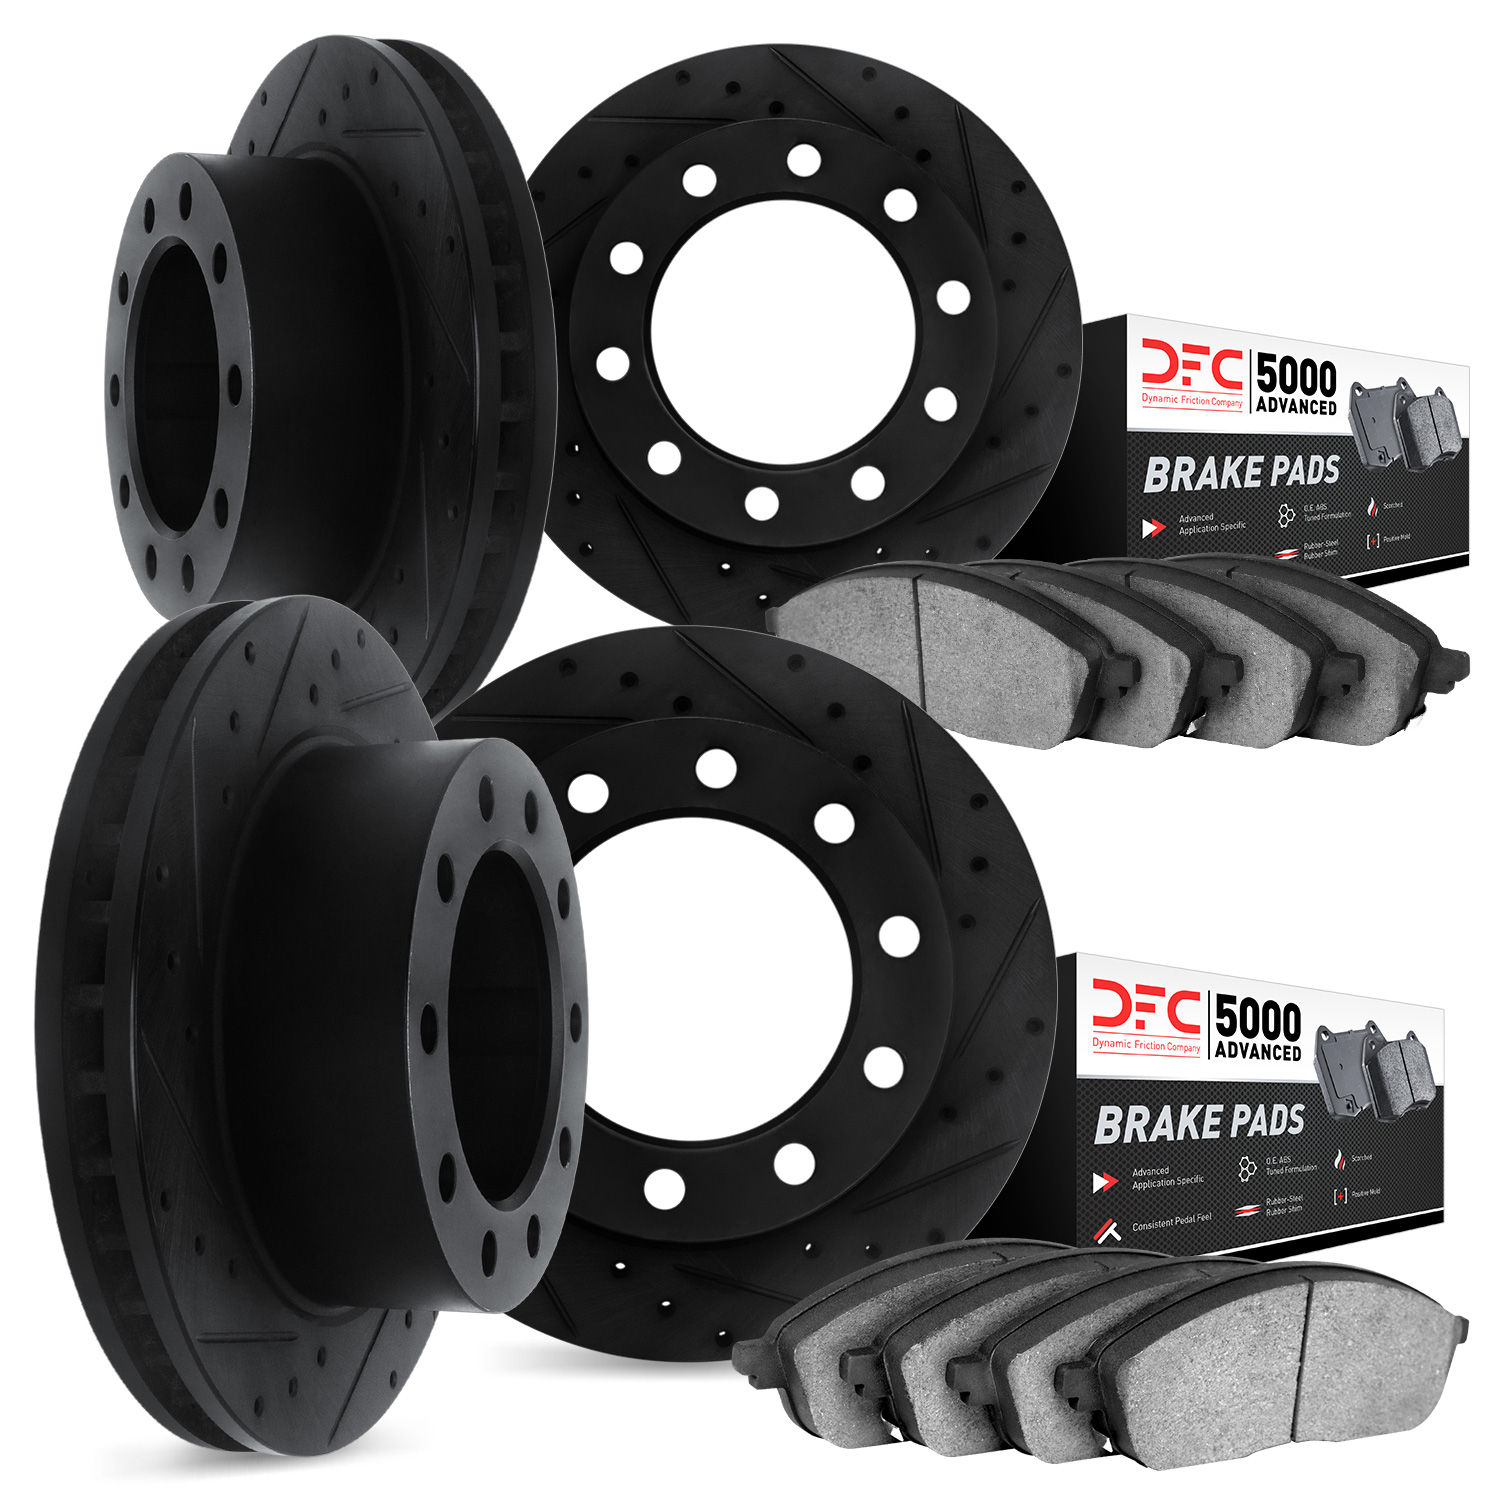 8504-48002 Drilled/Slotted Brake Rotors w/5000 Advanced Brake Pads Kit [Black], 1994-2005 Multiple Makes/Models, Position: Front